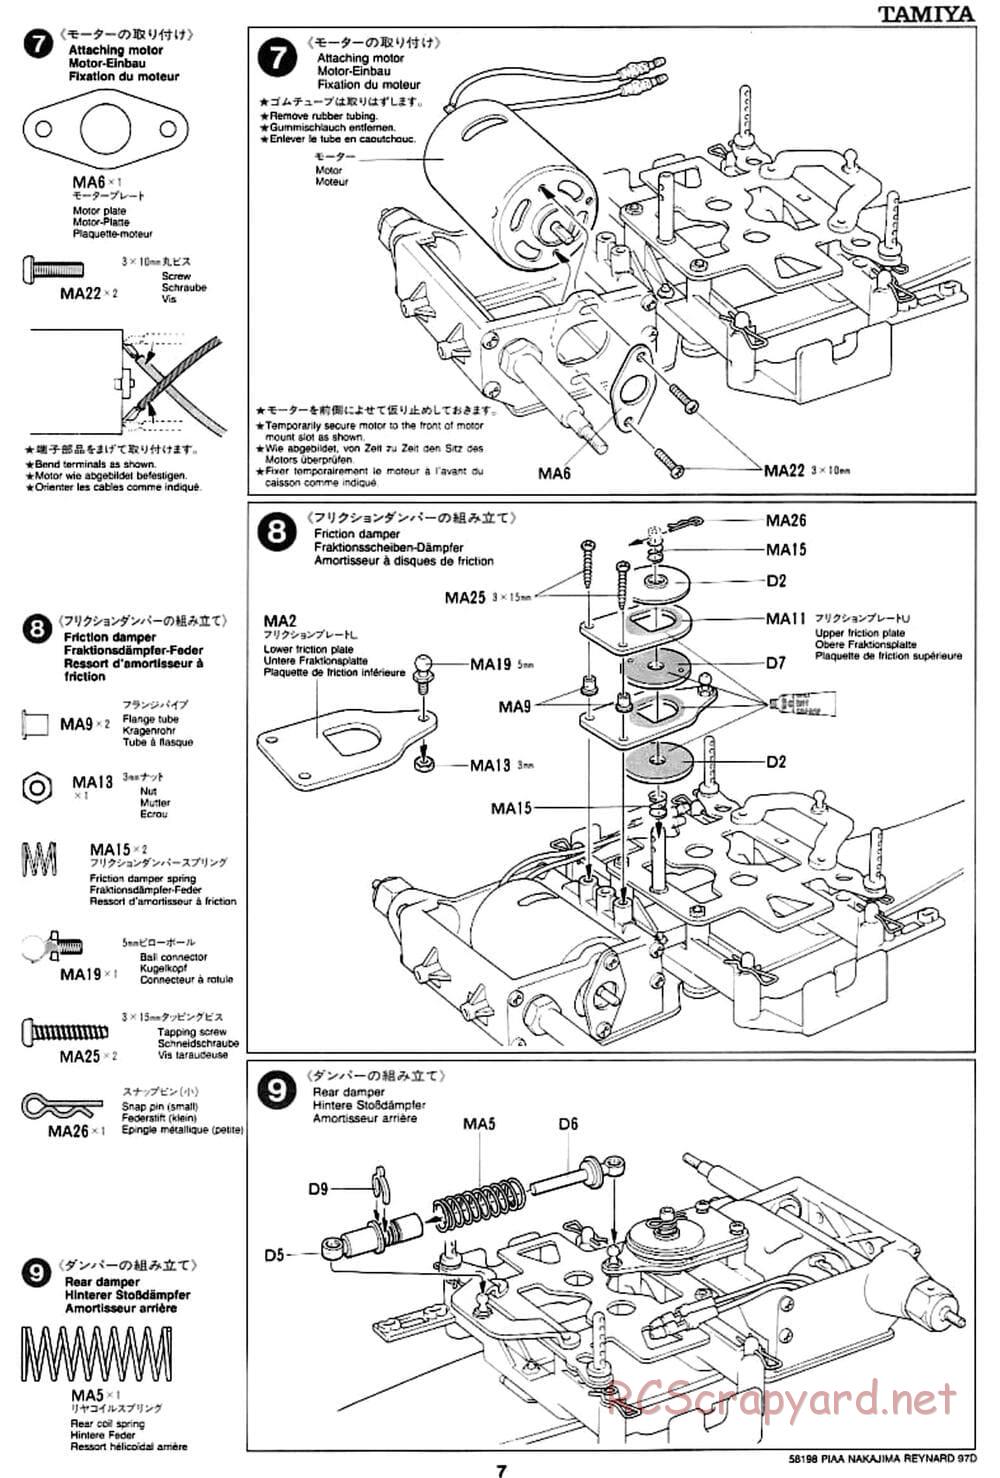 Tamiya - PIAA Nakajima Reynard 97D - F103 Chassis - Manual - Page 7